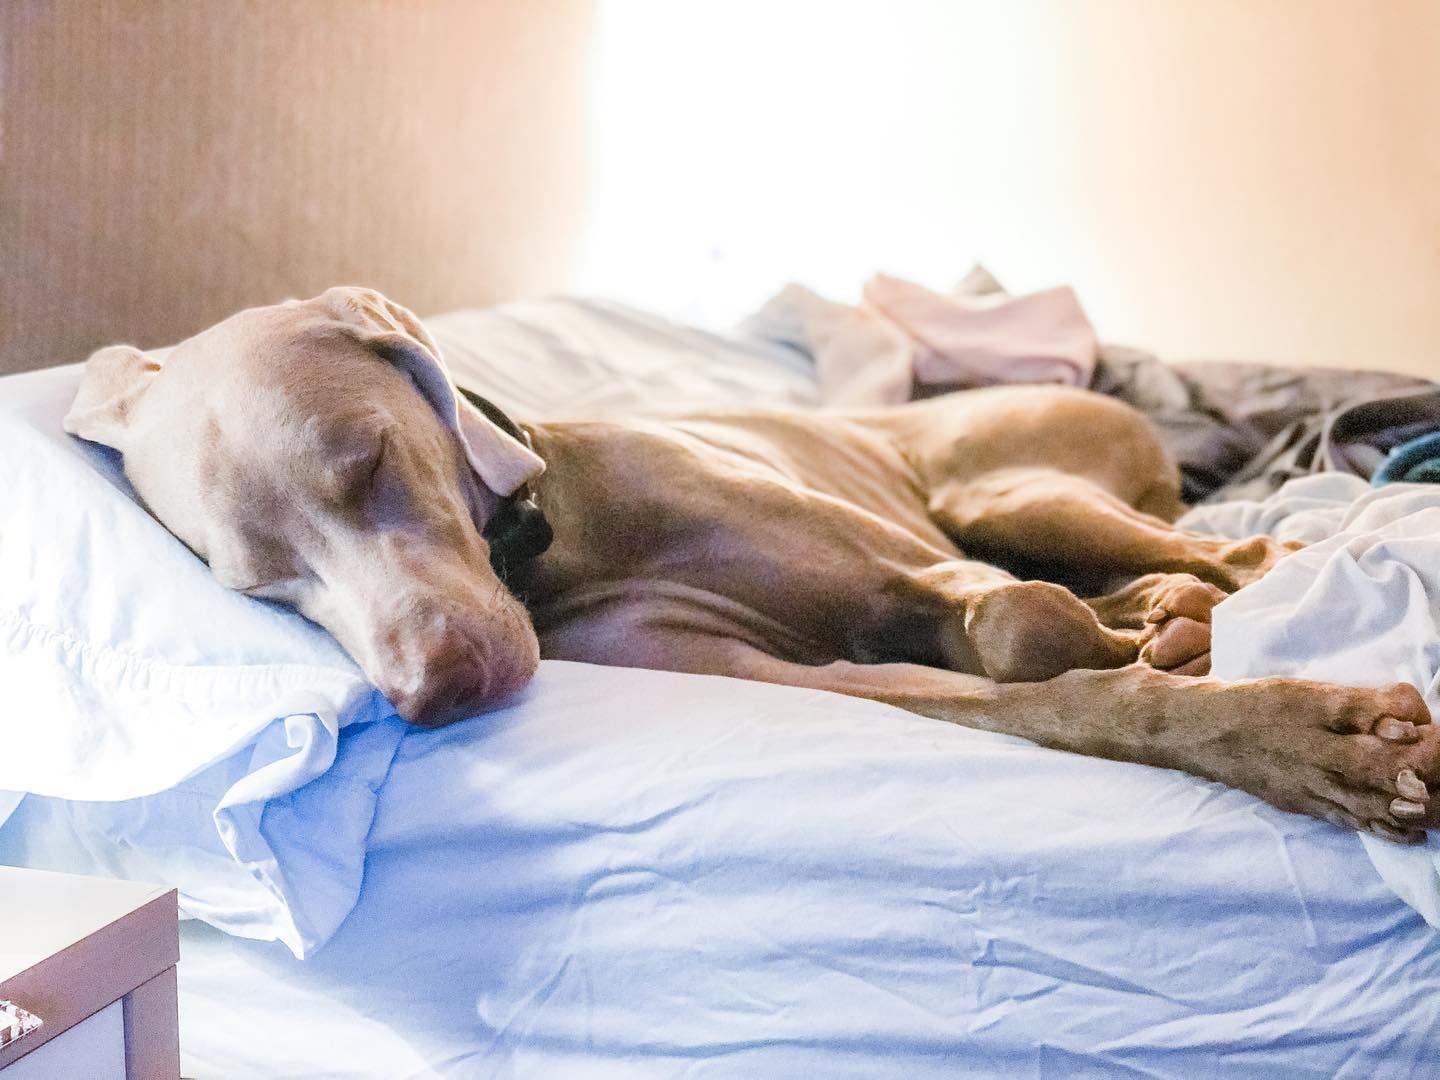 Let sleeping dogs lie... or else #dogsonbeds #sleepydog #weimaraner #weimsofinstagram #dogsofinstagram #dontwakethebaby [instagram]